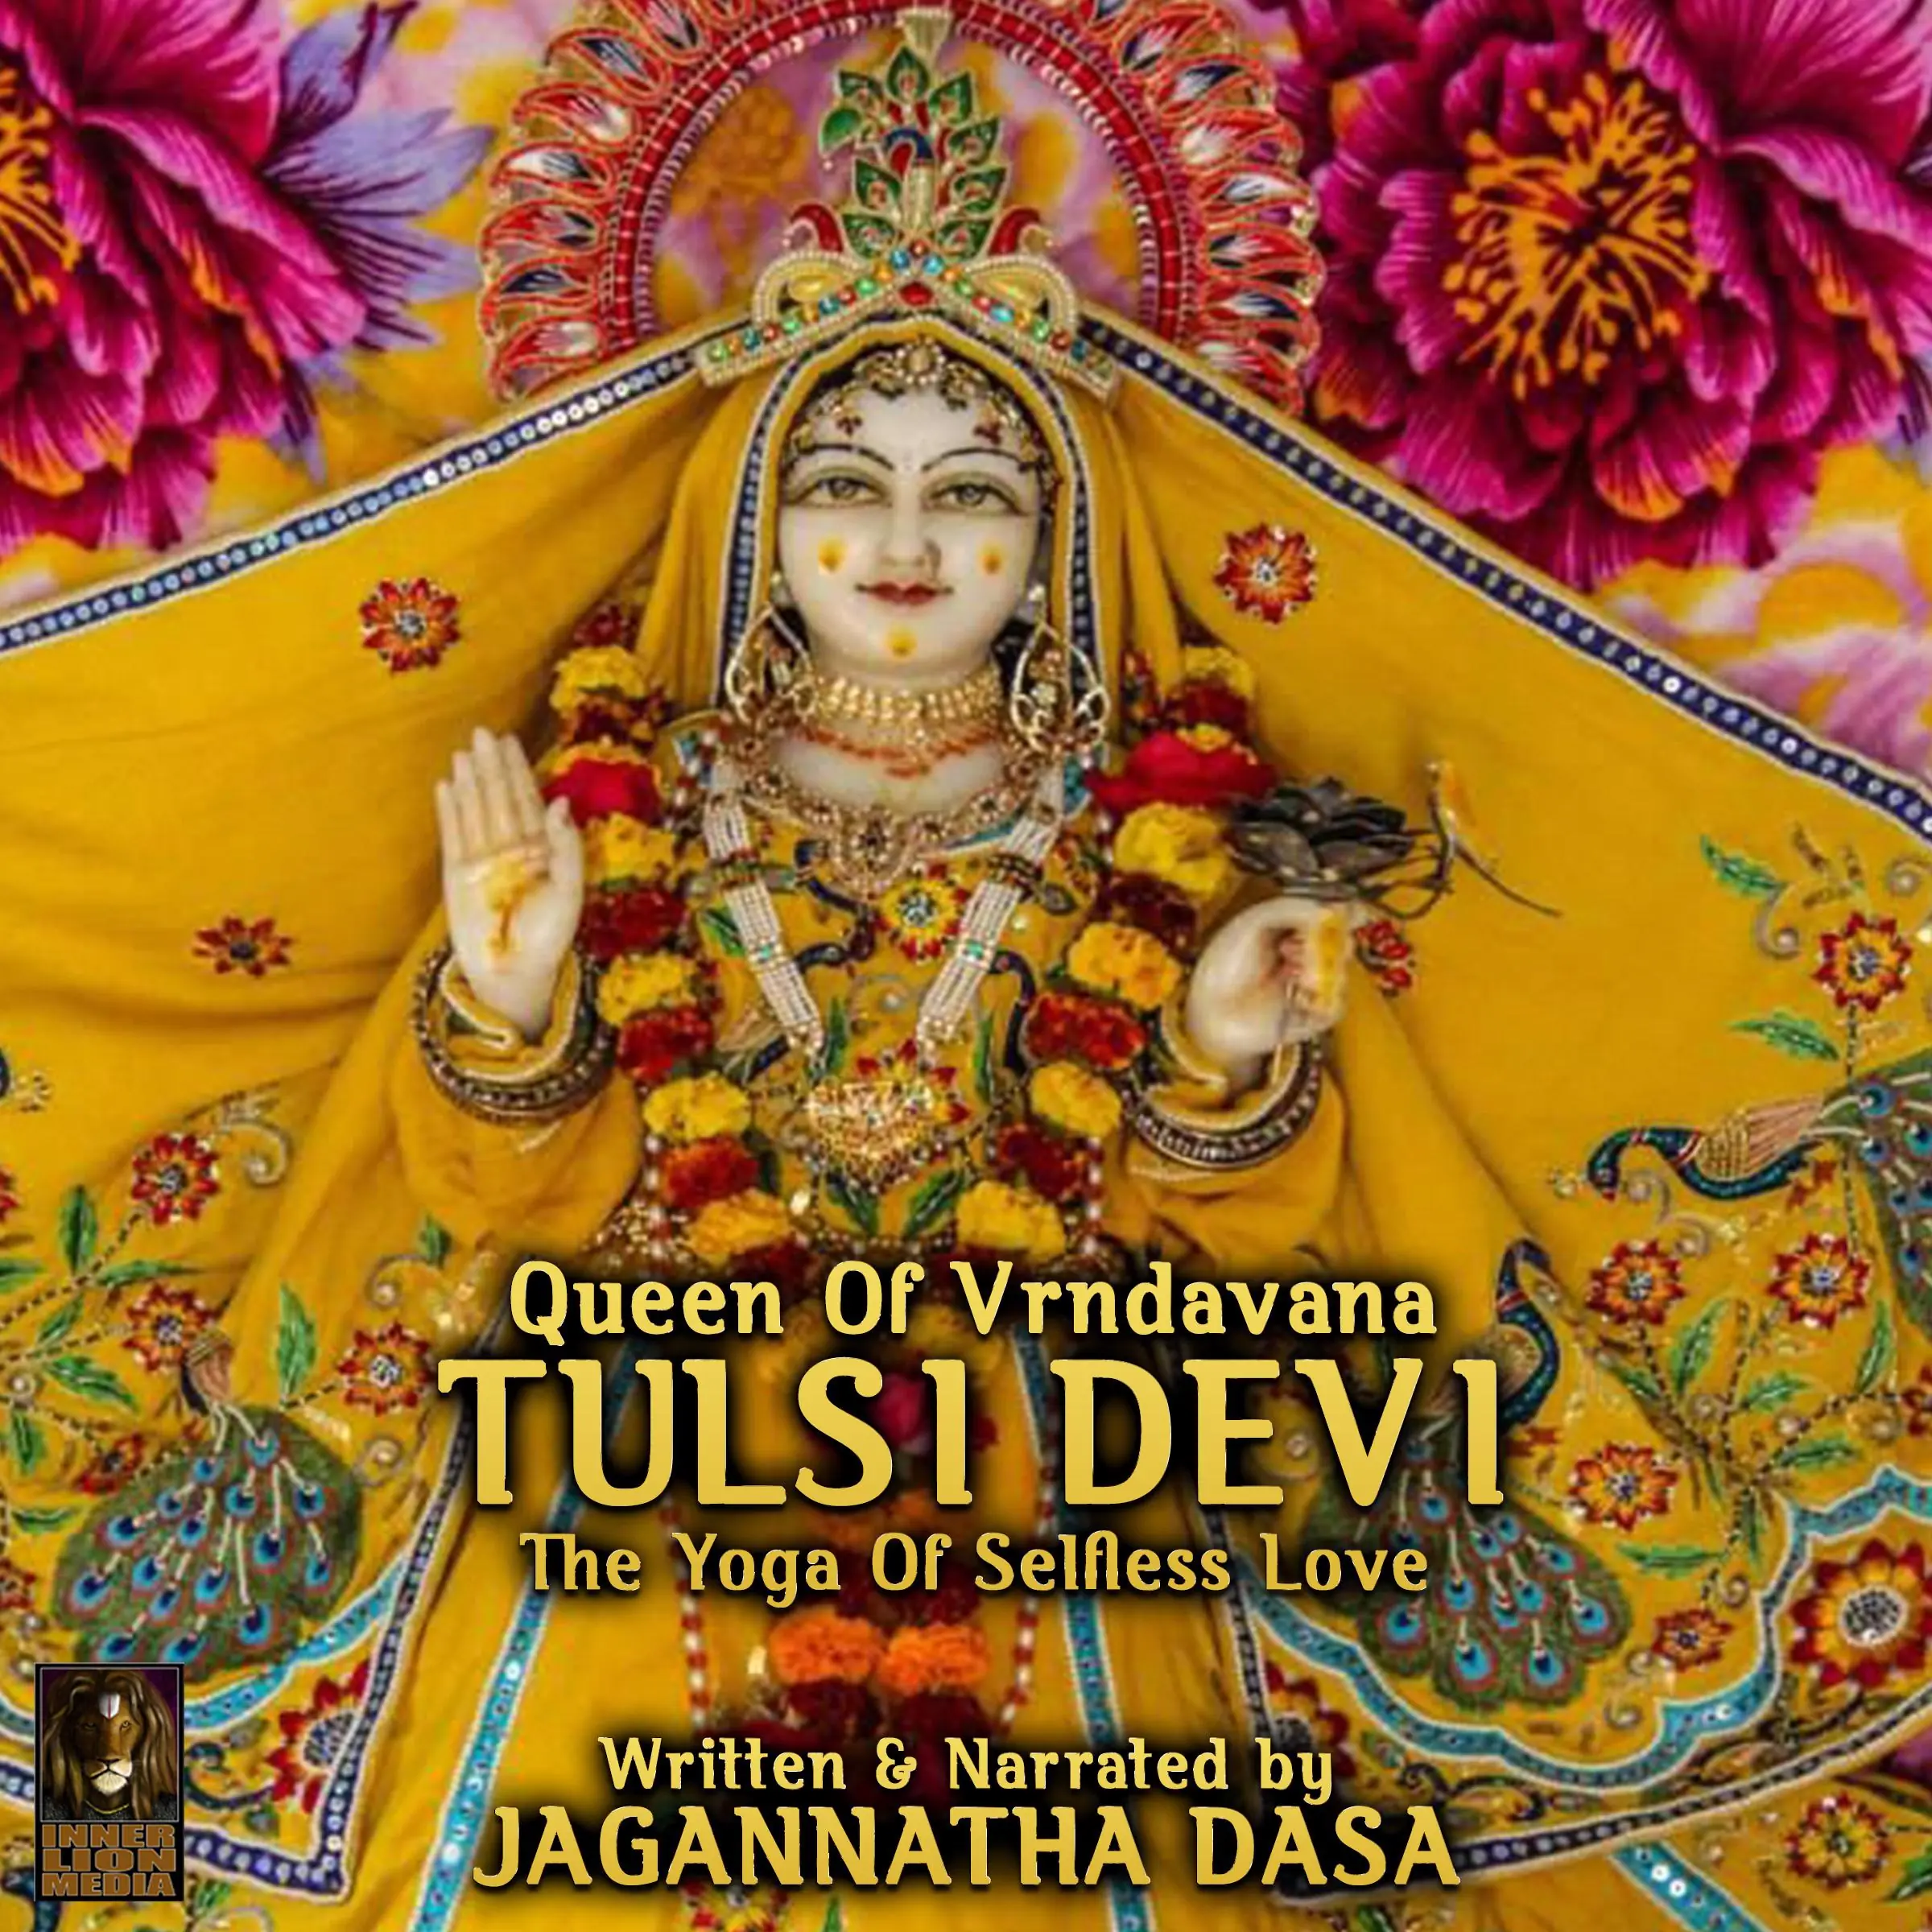 Queen Of Vrndavana Tulsi Devi - The Yoga Of Selfless Love Audiobook by Jagannatha Dasa